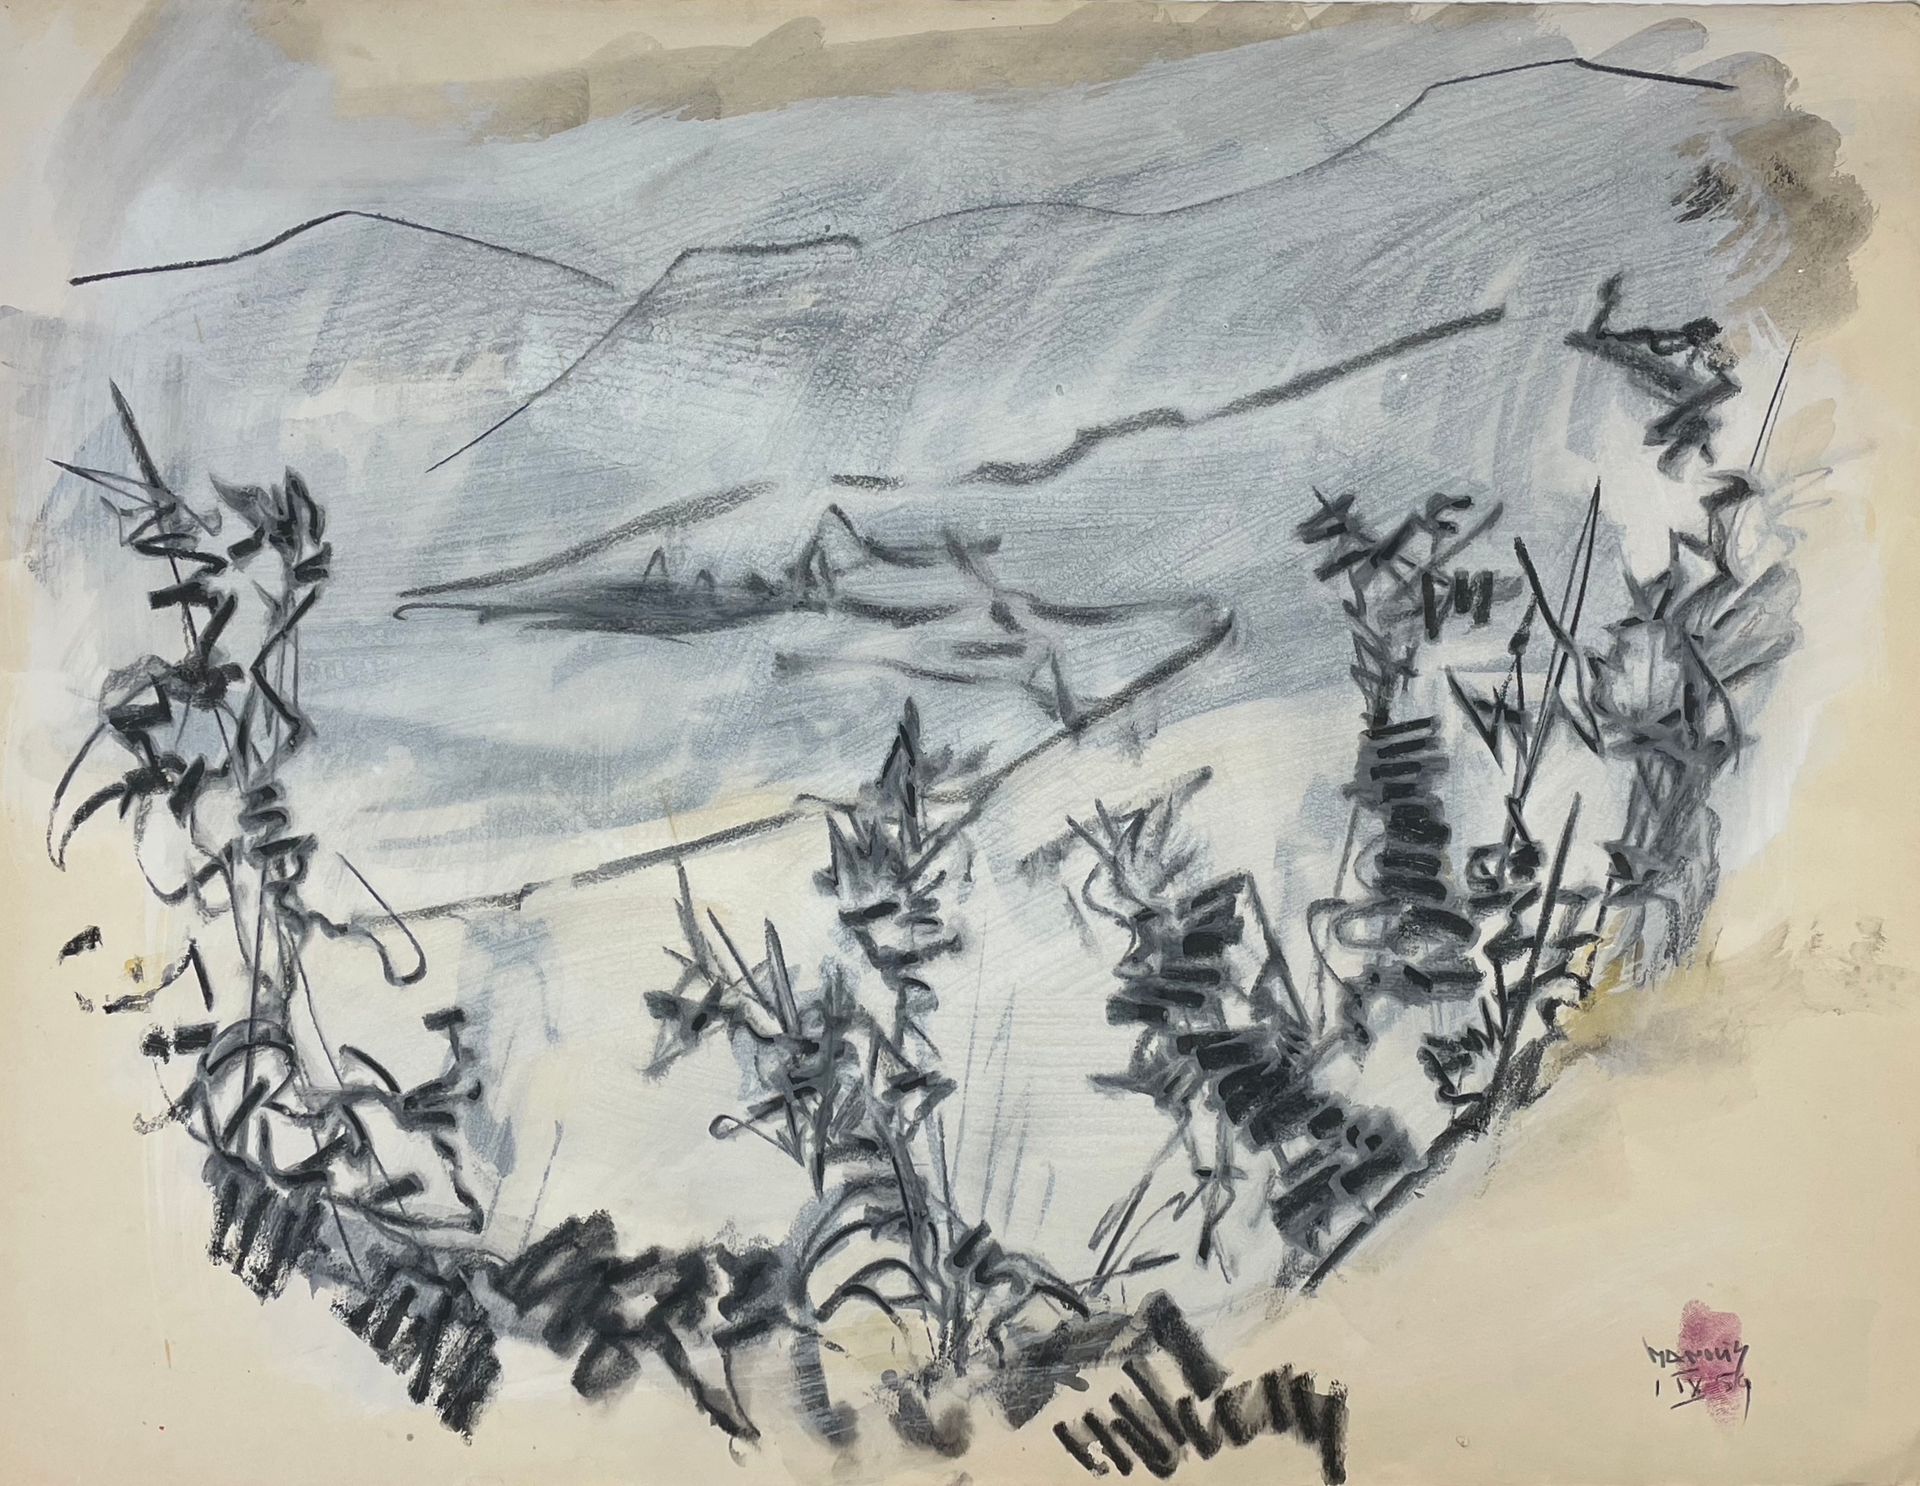 Null CALIYANNIS（马诺里斯）。"海景"（1959年）。纸上水彩画，右下角有日期和签名。支持物和主题的尺寸：50 x 65厘米。